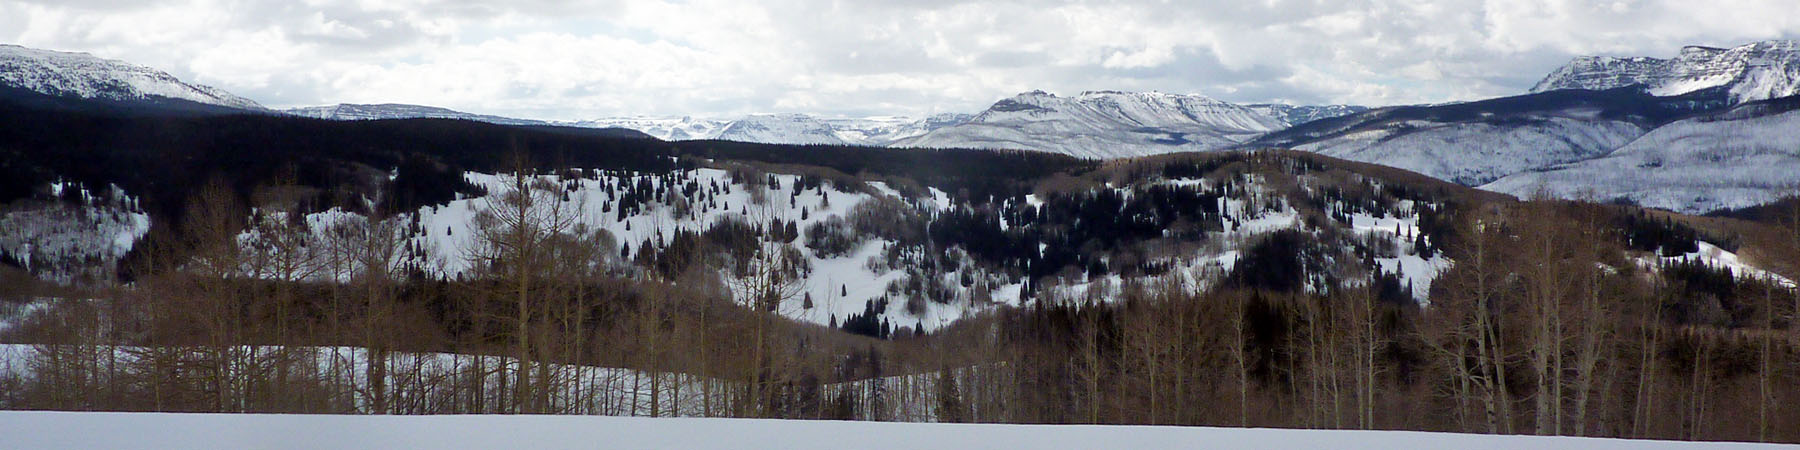 Winter Banner Image